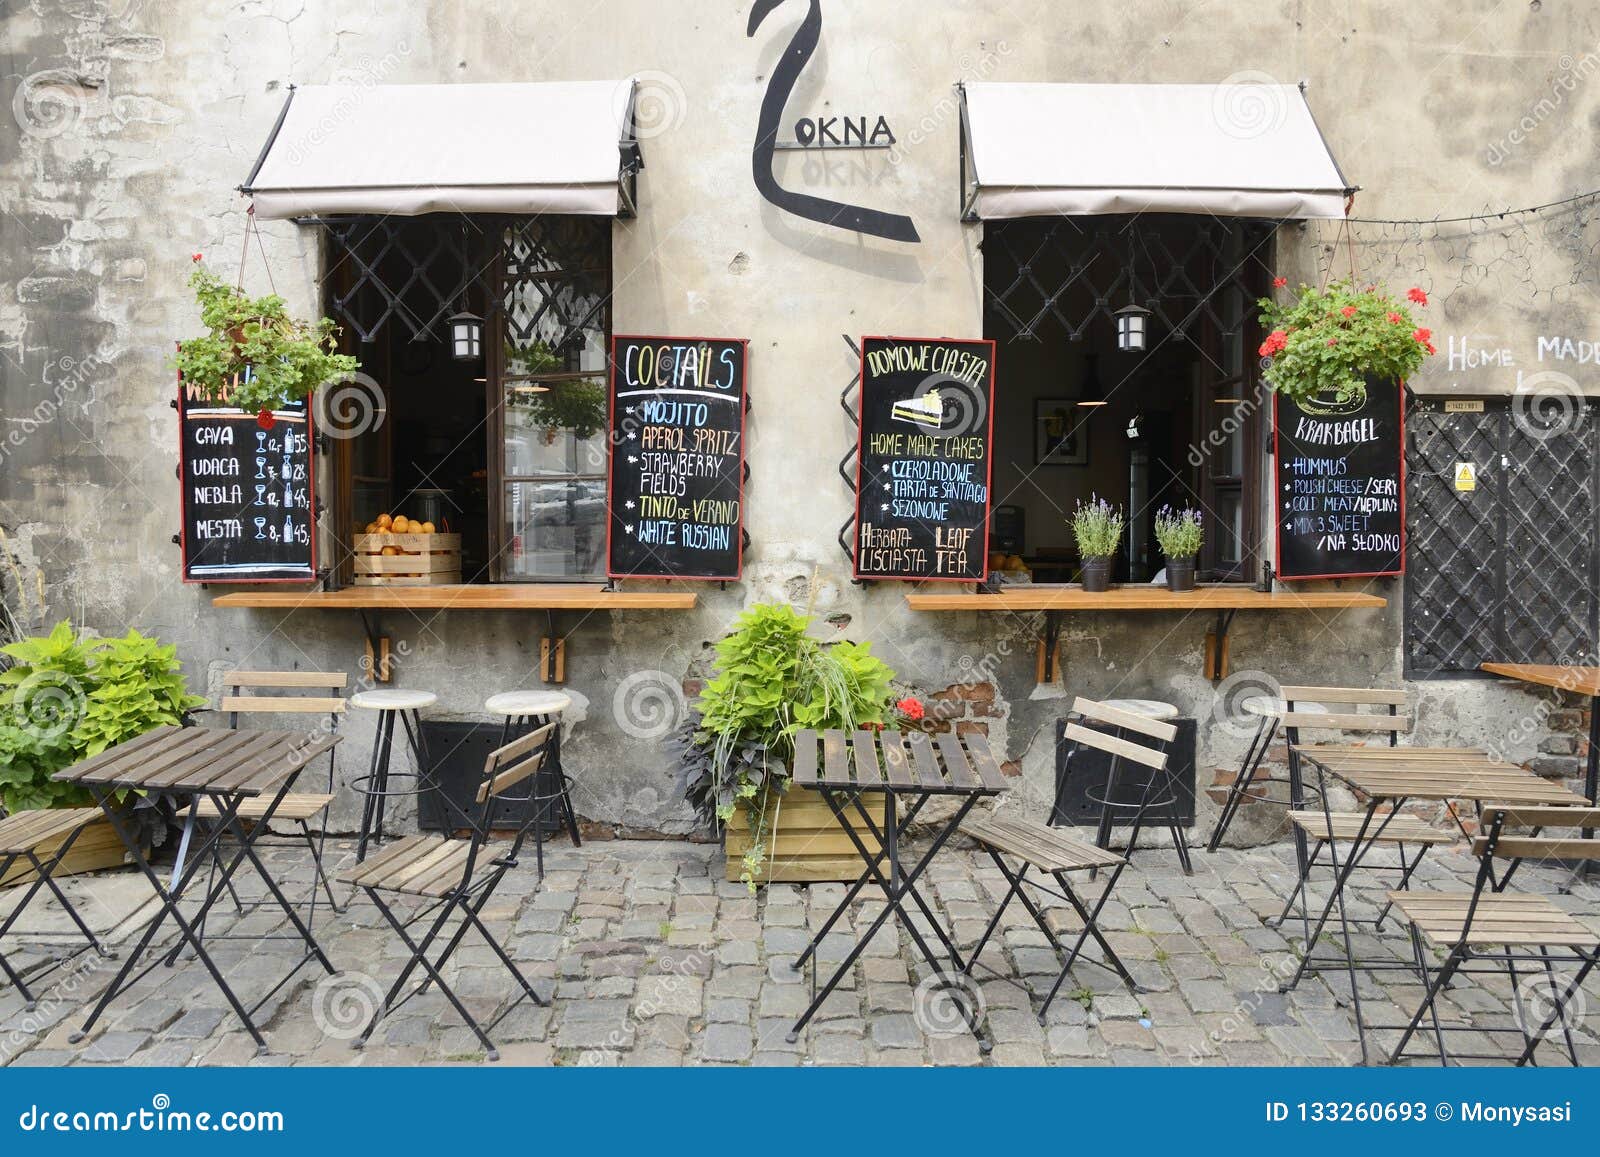 Picturesque Restaurant In The Jewish Quarter Of Krakow Editorial Stock